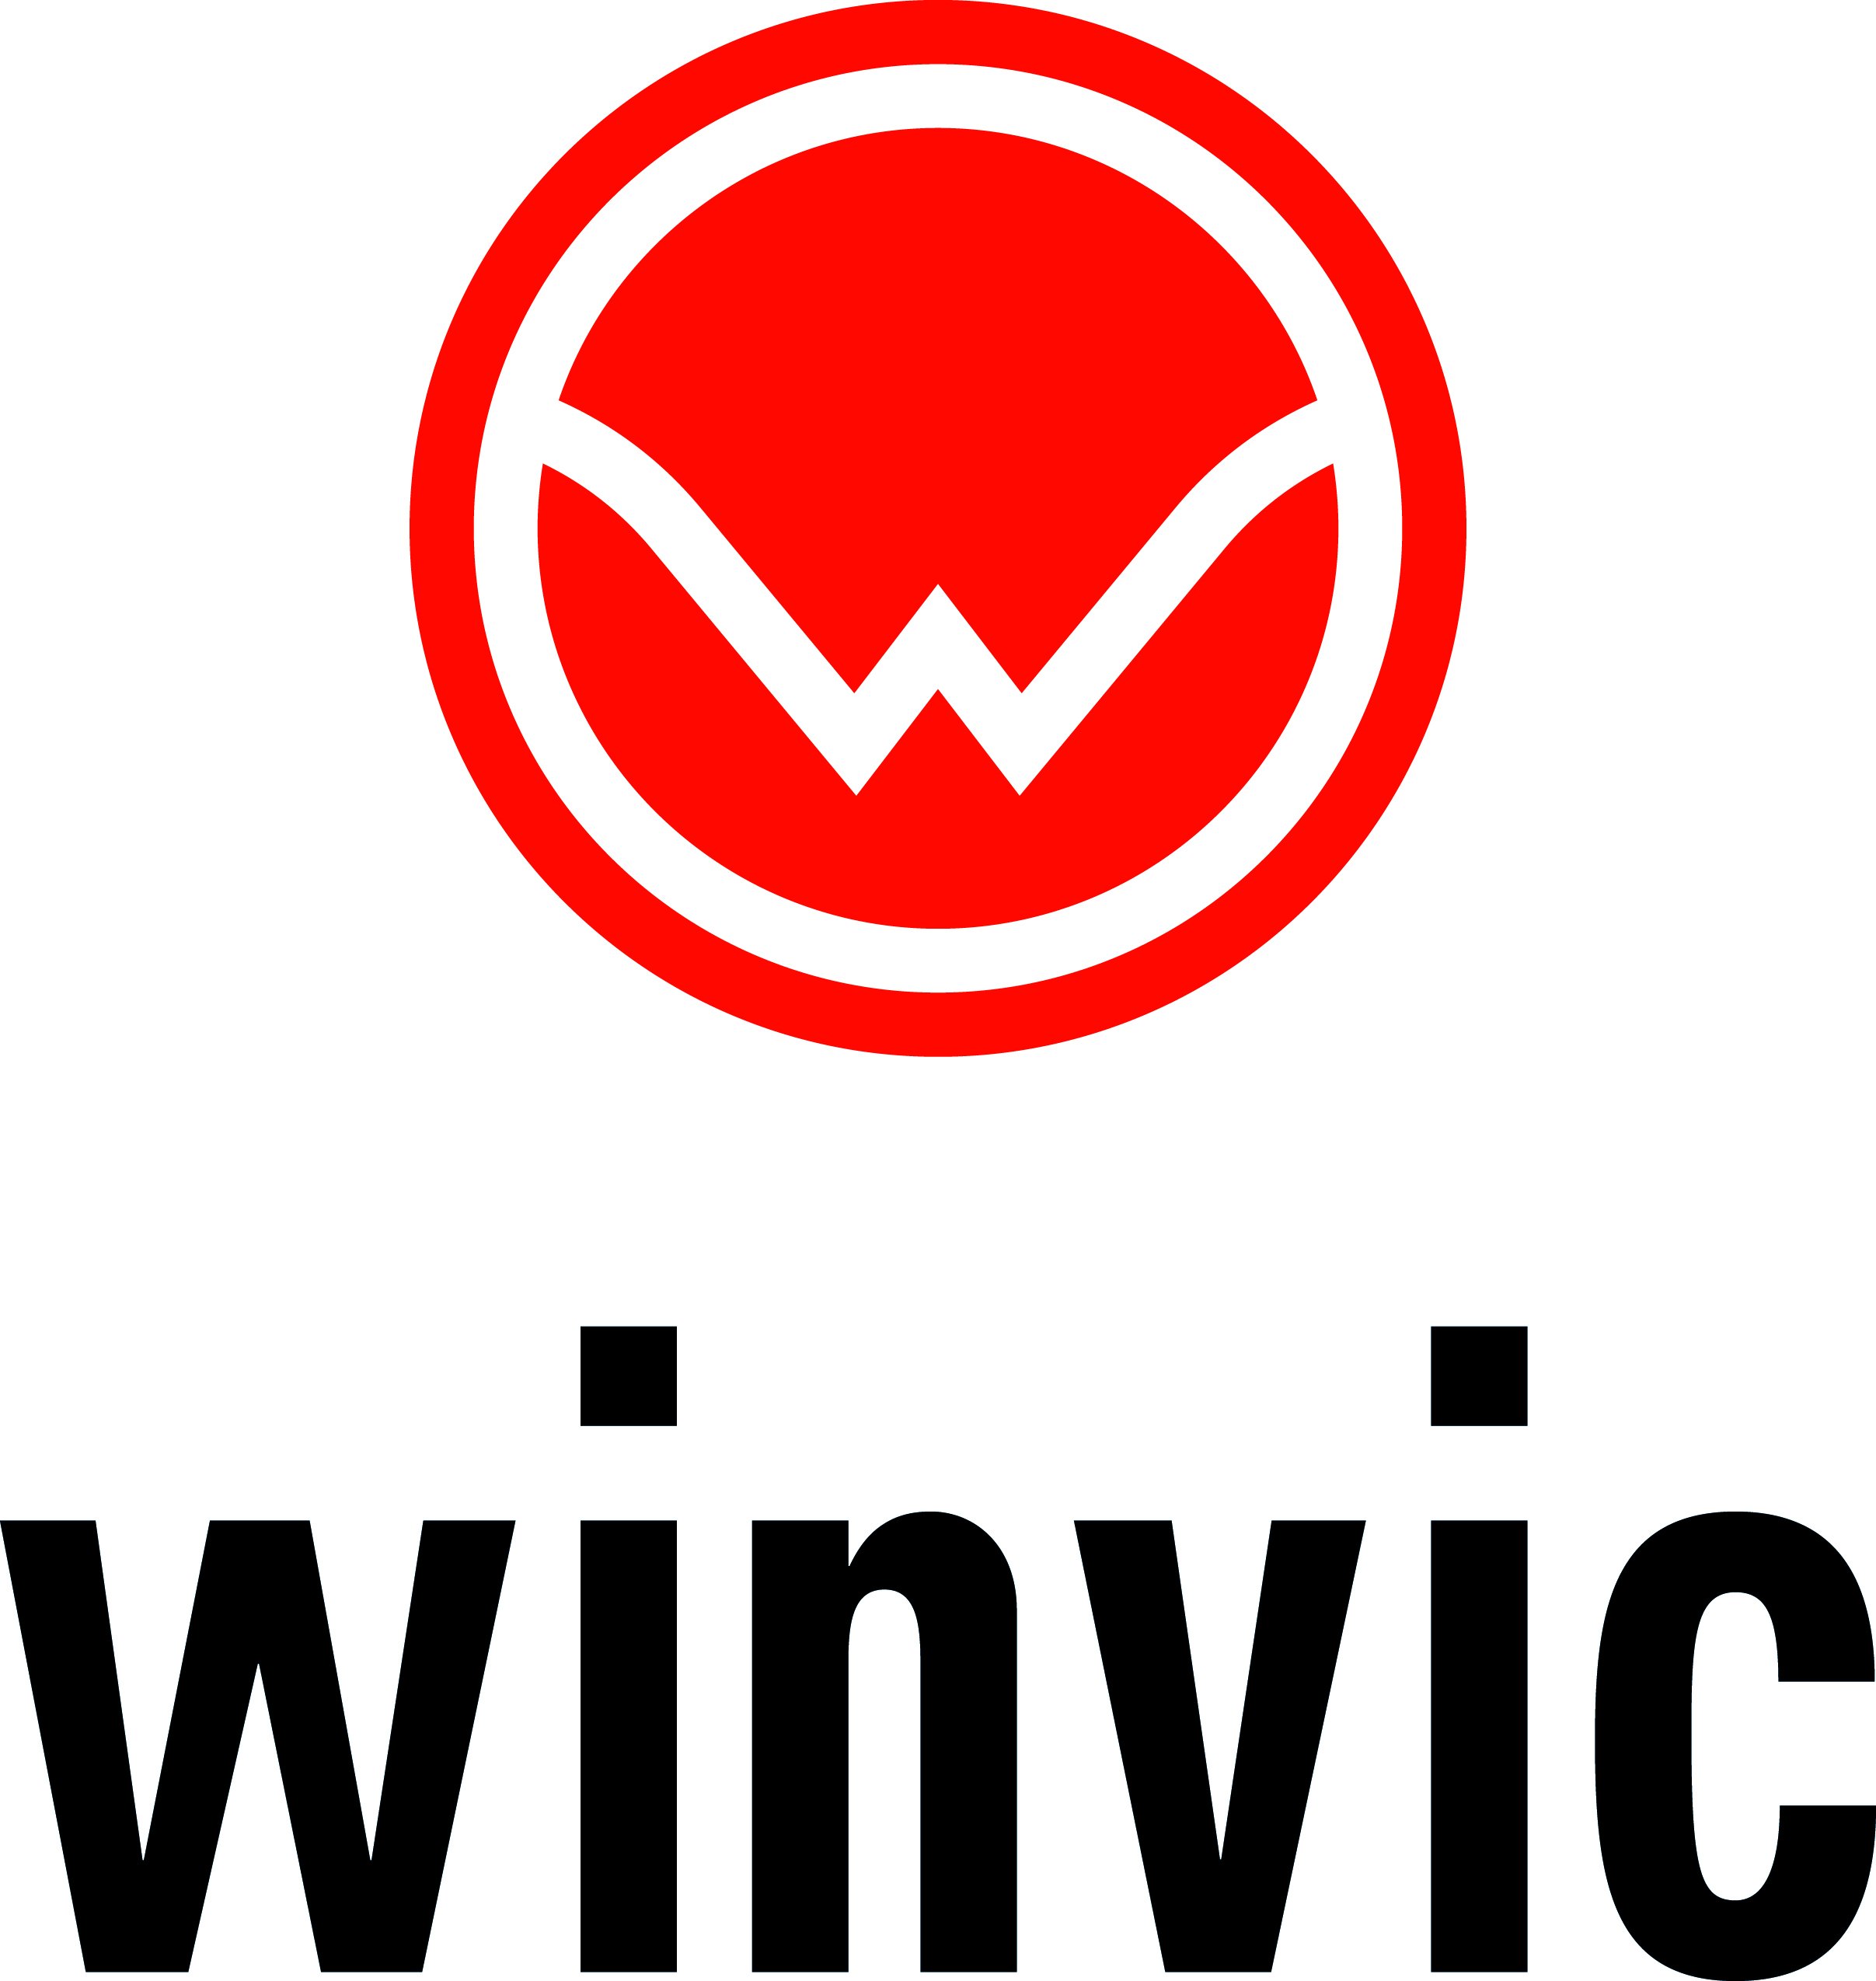 Winvic Construction Ltd